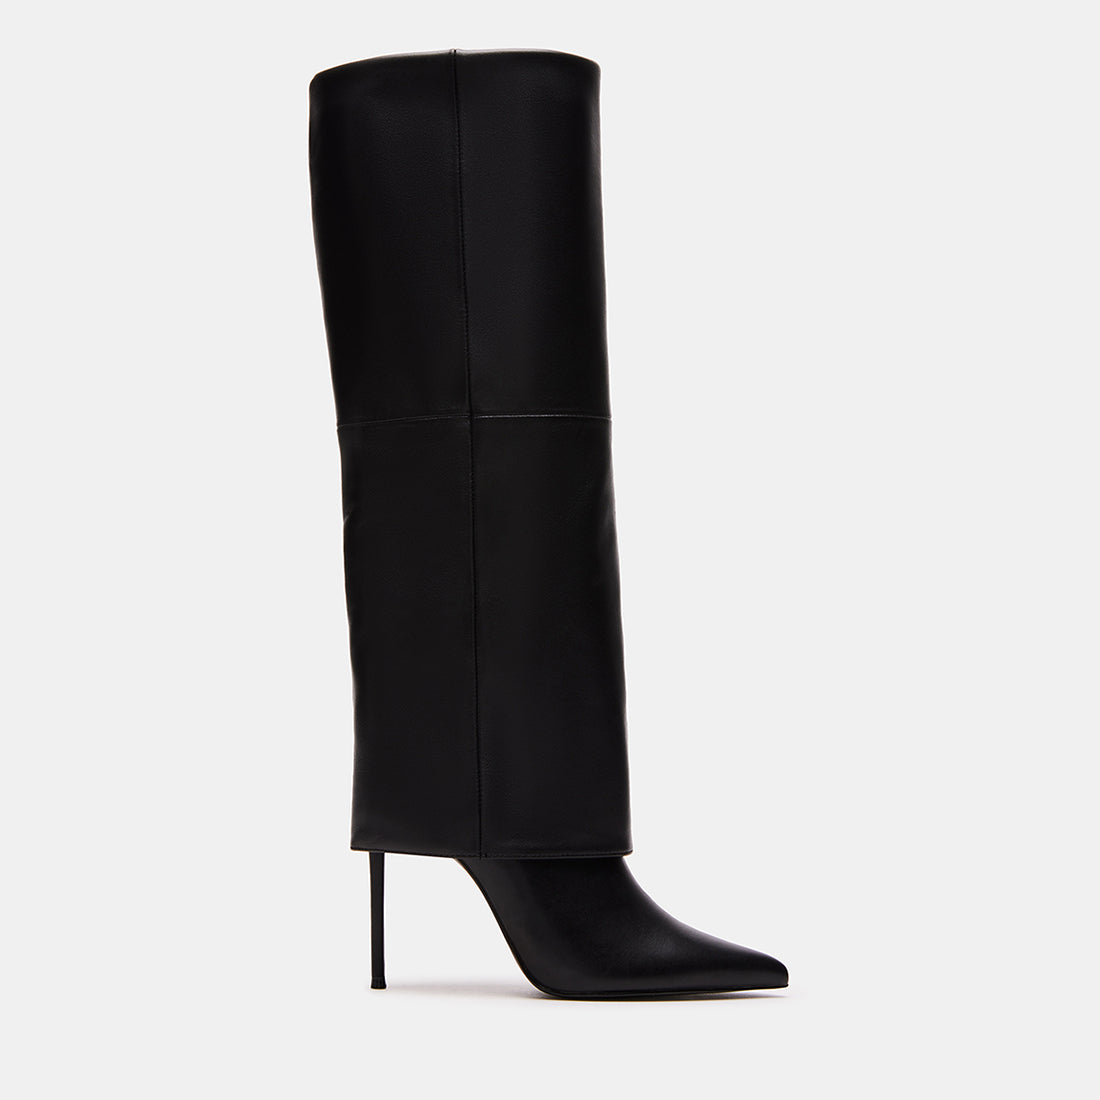 SMITH Black Leather Cuffed Knee High Stiletto Boots | Women's Designer ...